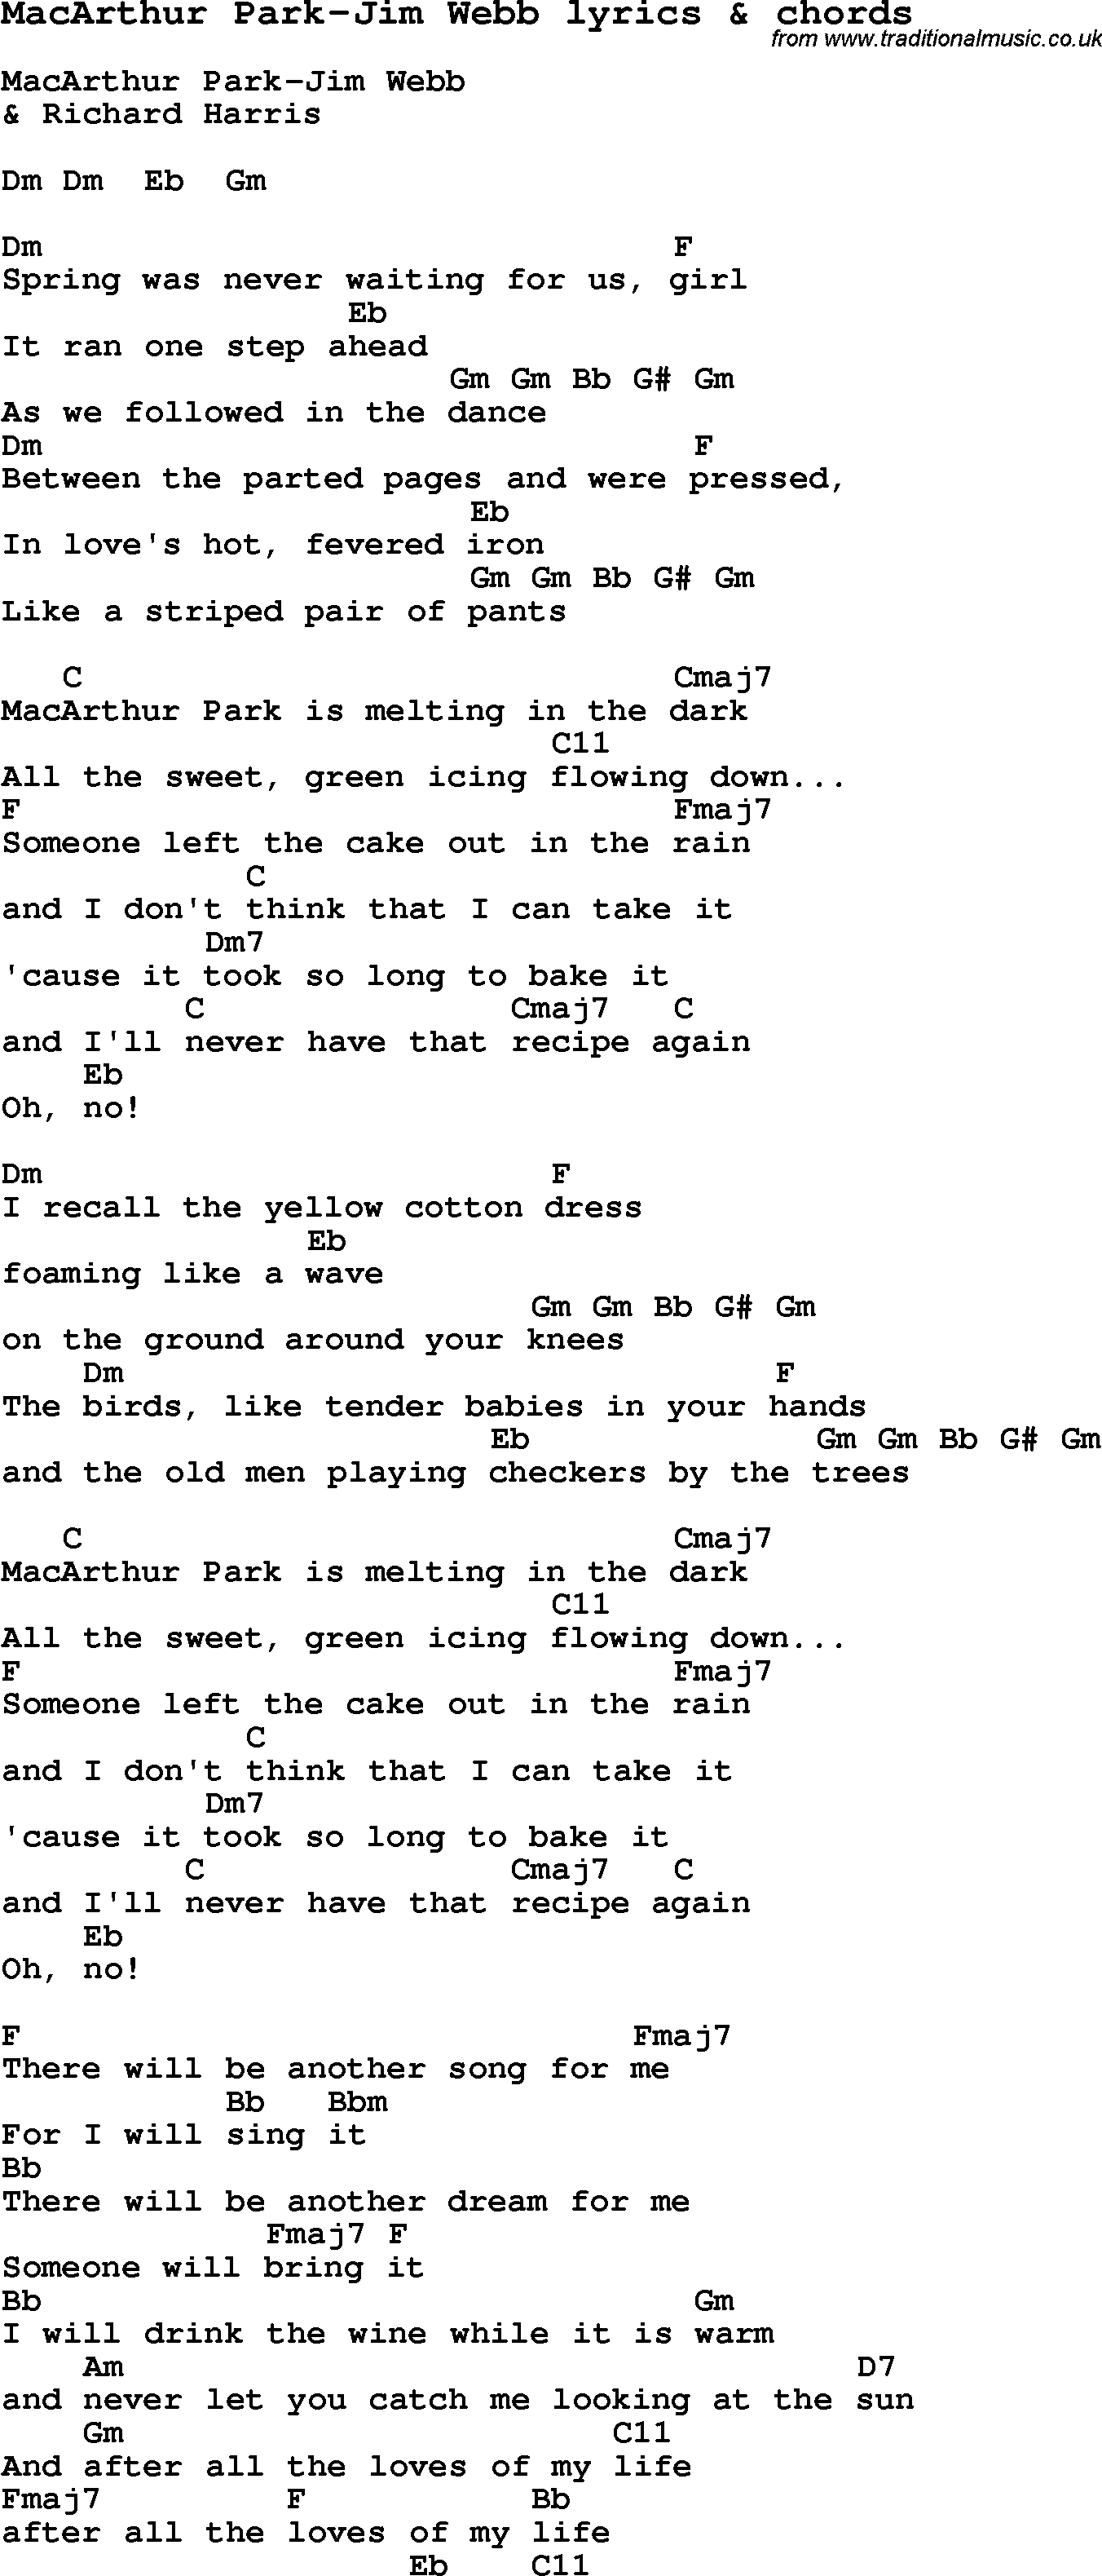 Love Song Lyrics for: MacArthur Park-Jim Webb with chords for Ukulele, Guitar Banjo etc.